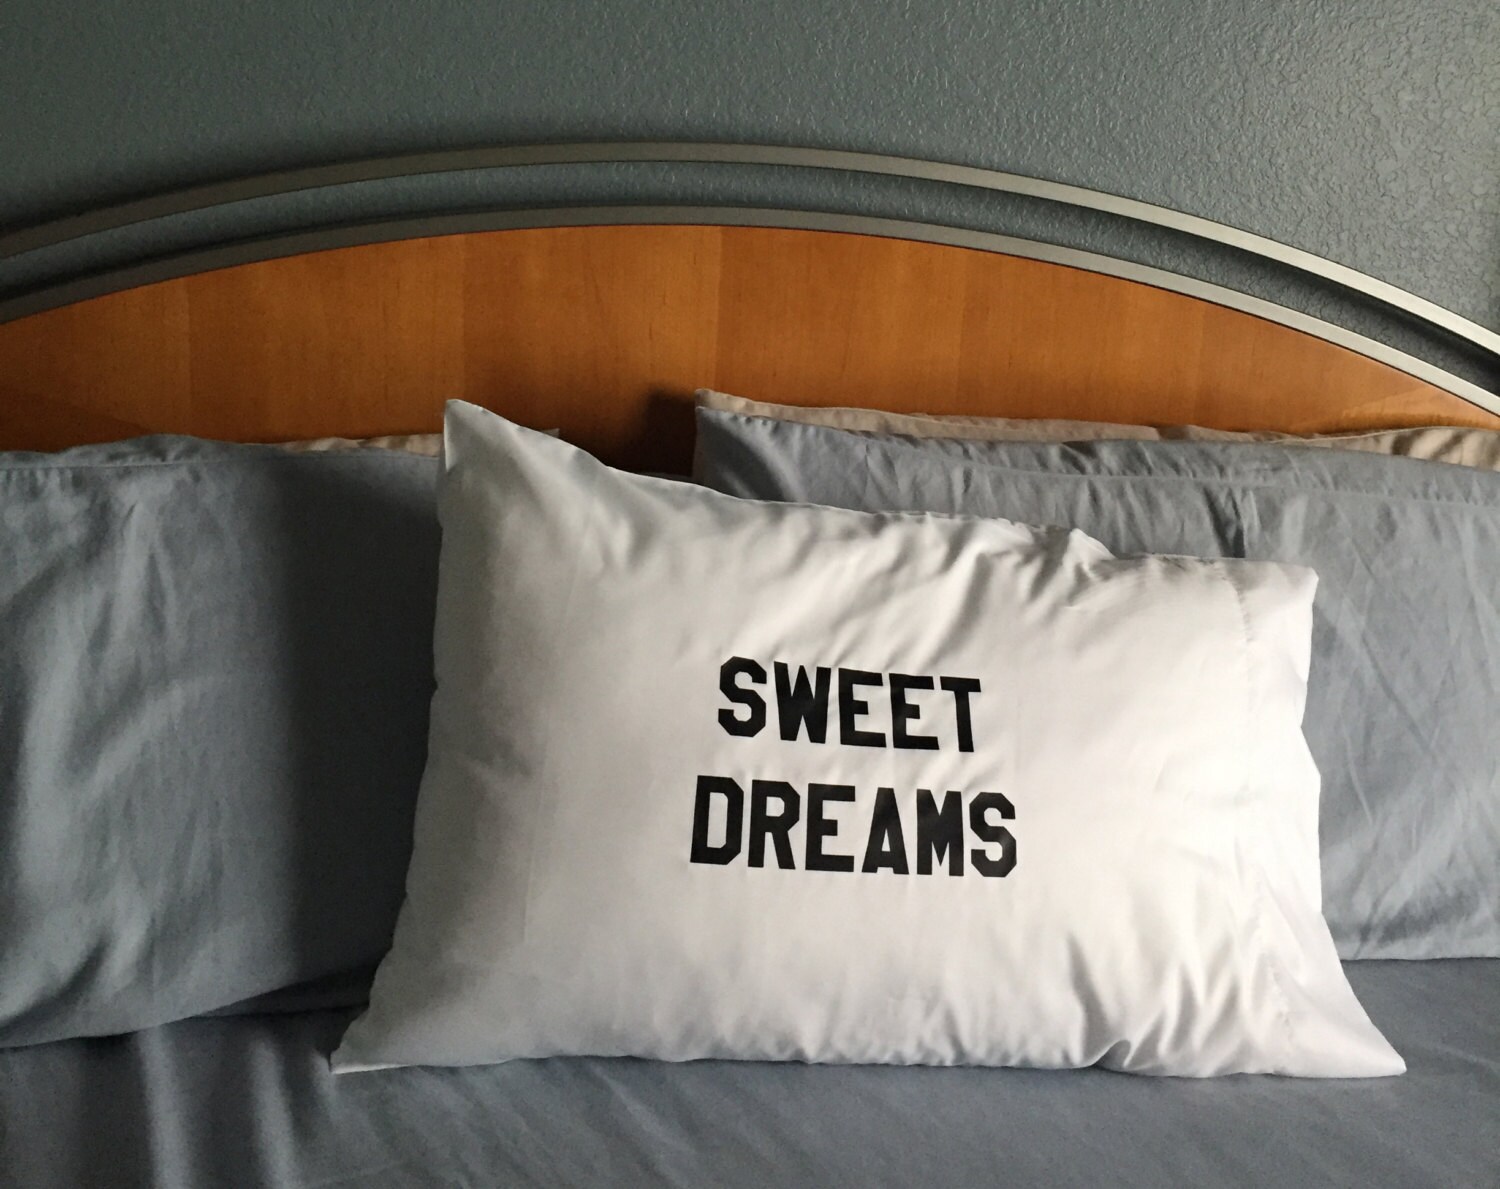 Sweet dreams pillowcases